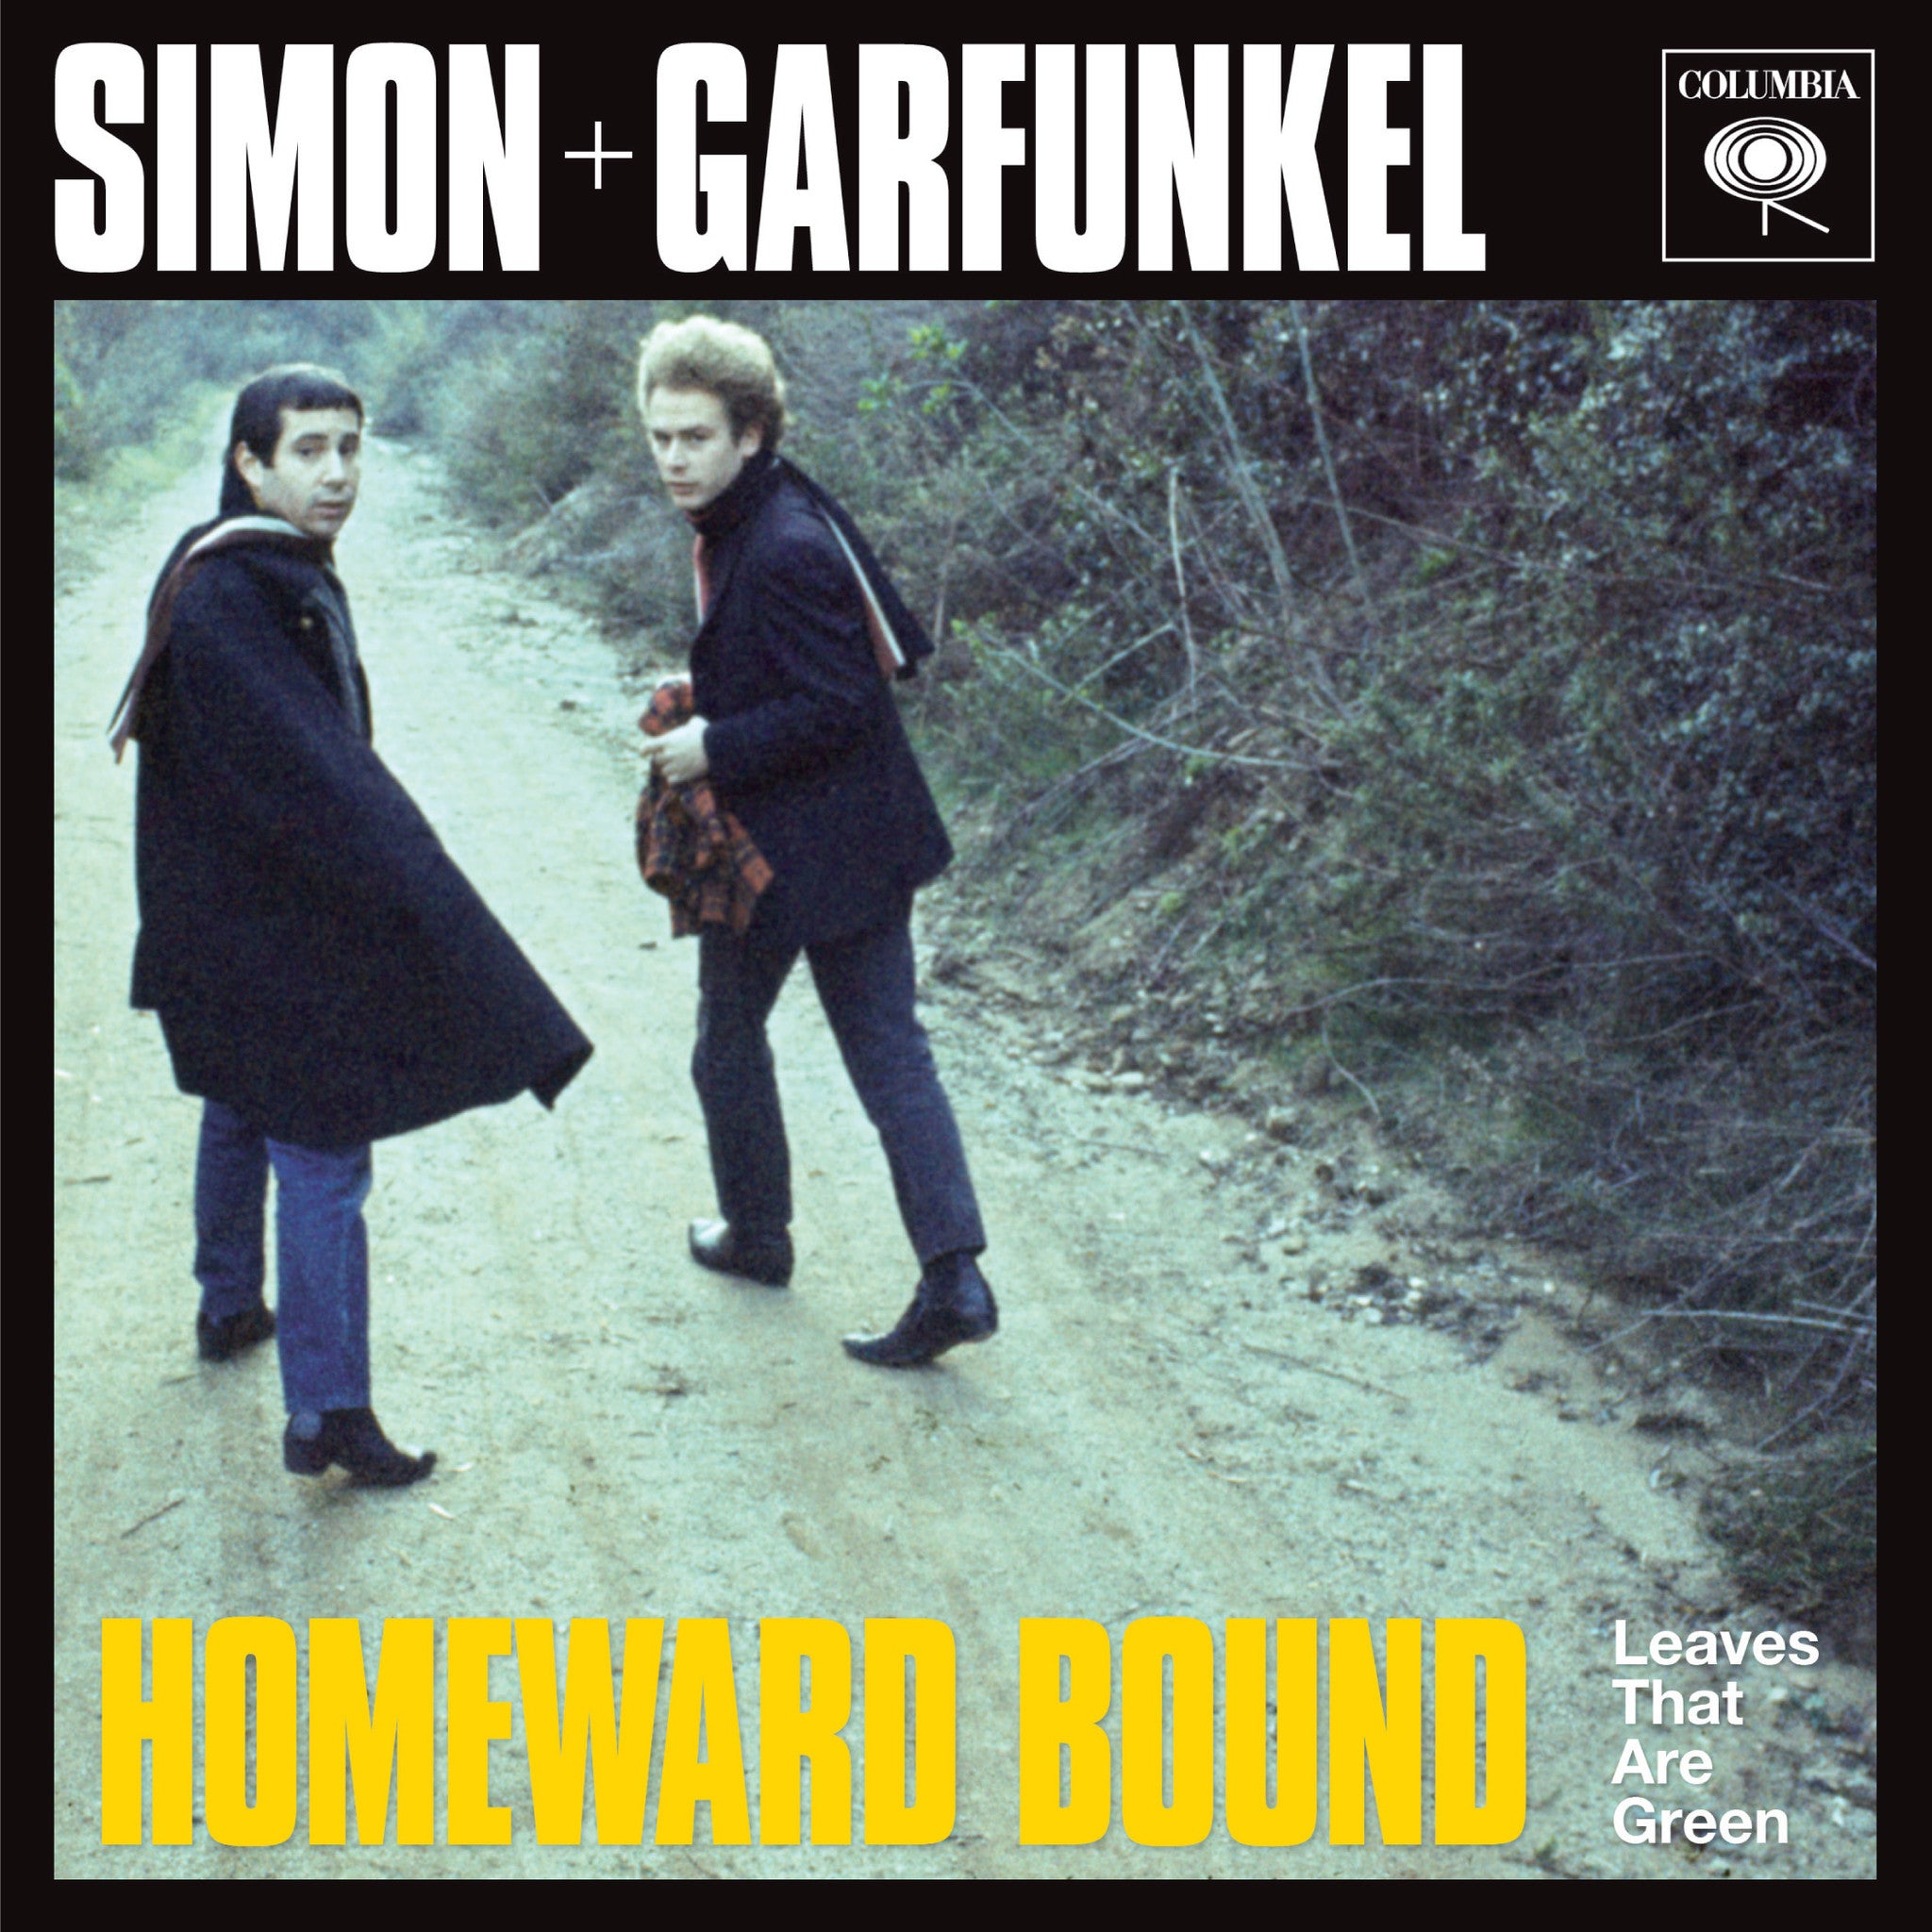 Simon + Garfunkel - Homeward Bound/Leaves That Are Green 7" (RSD 2018)